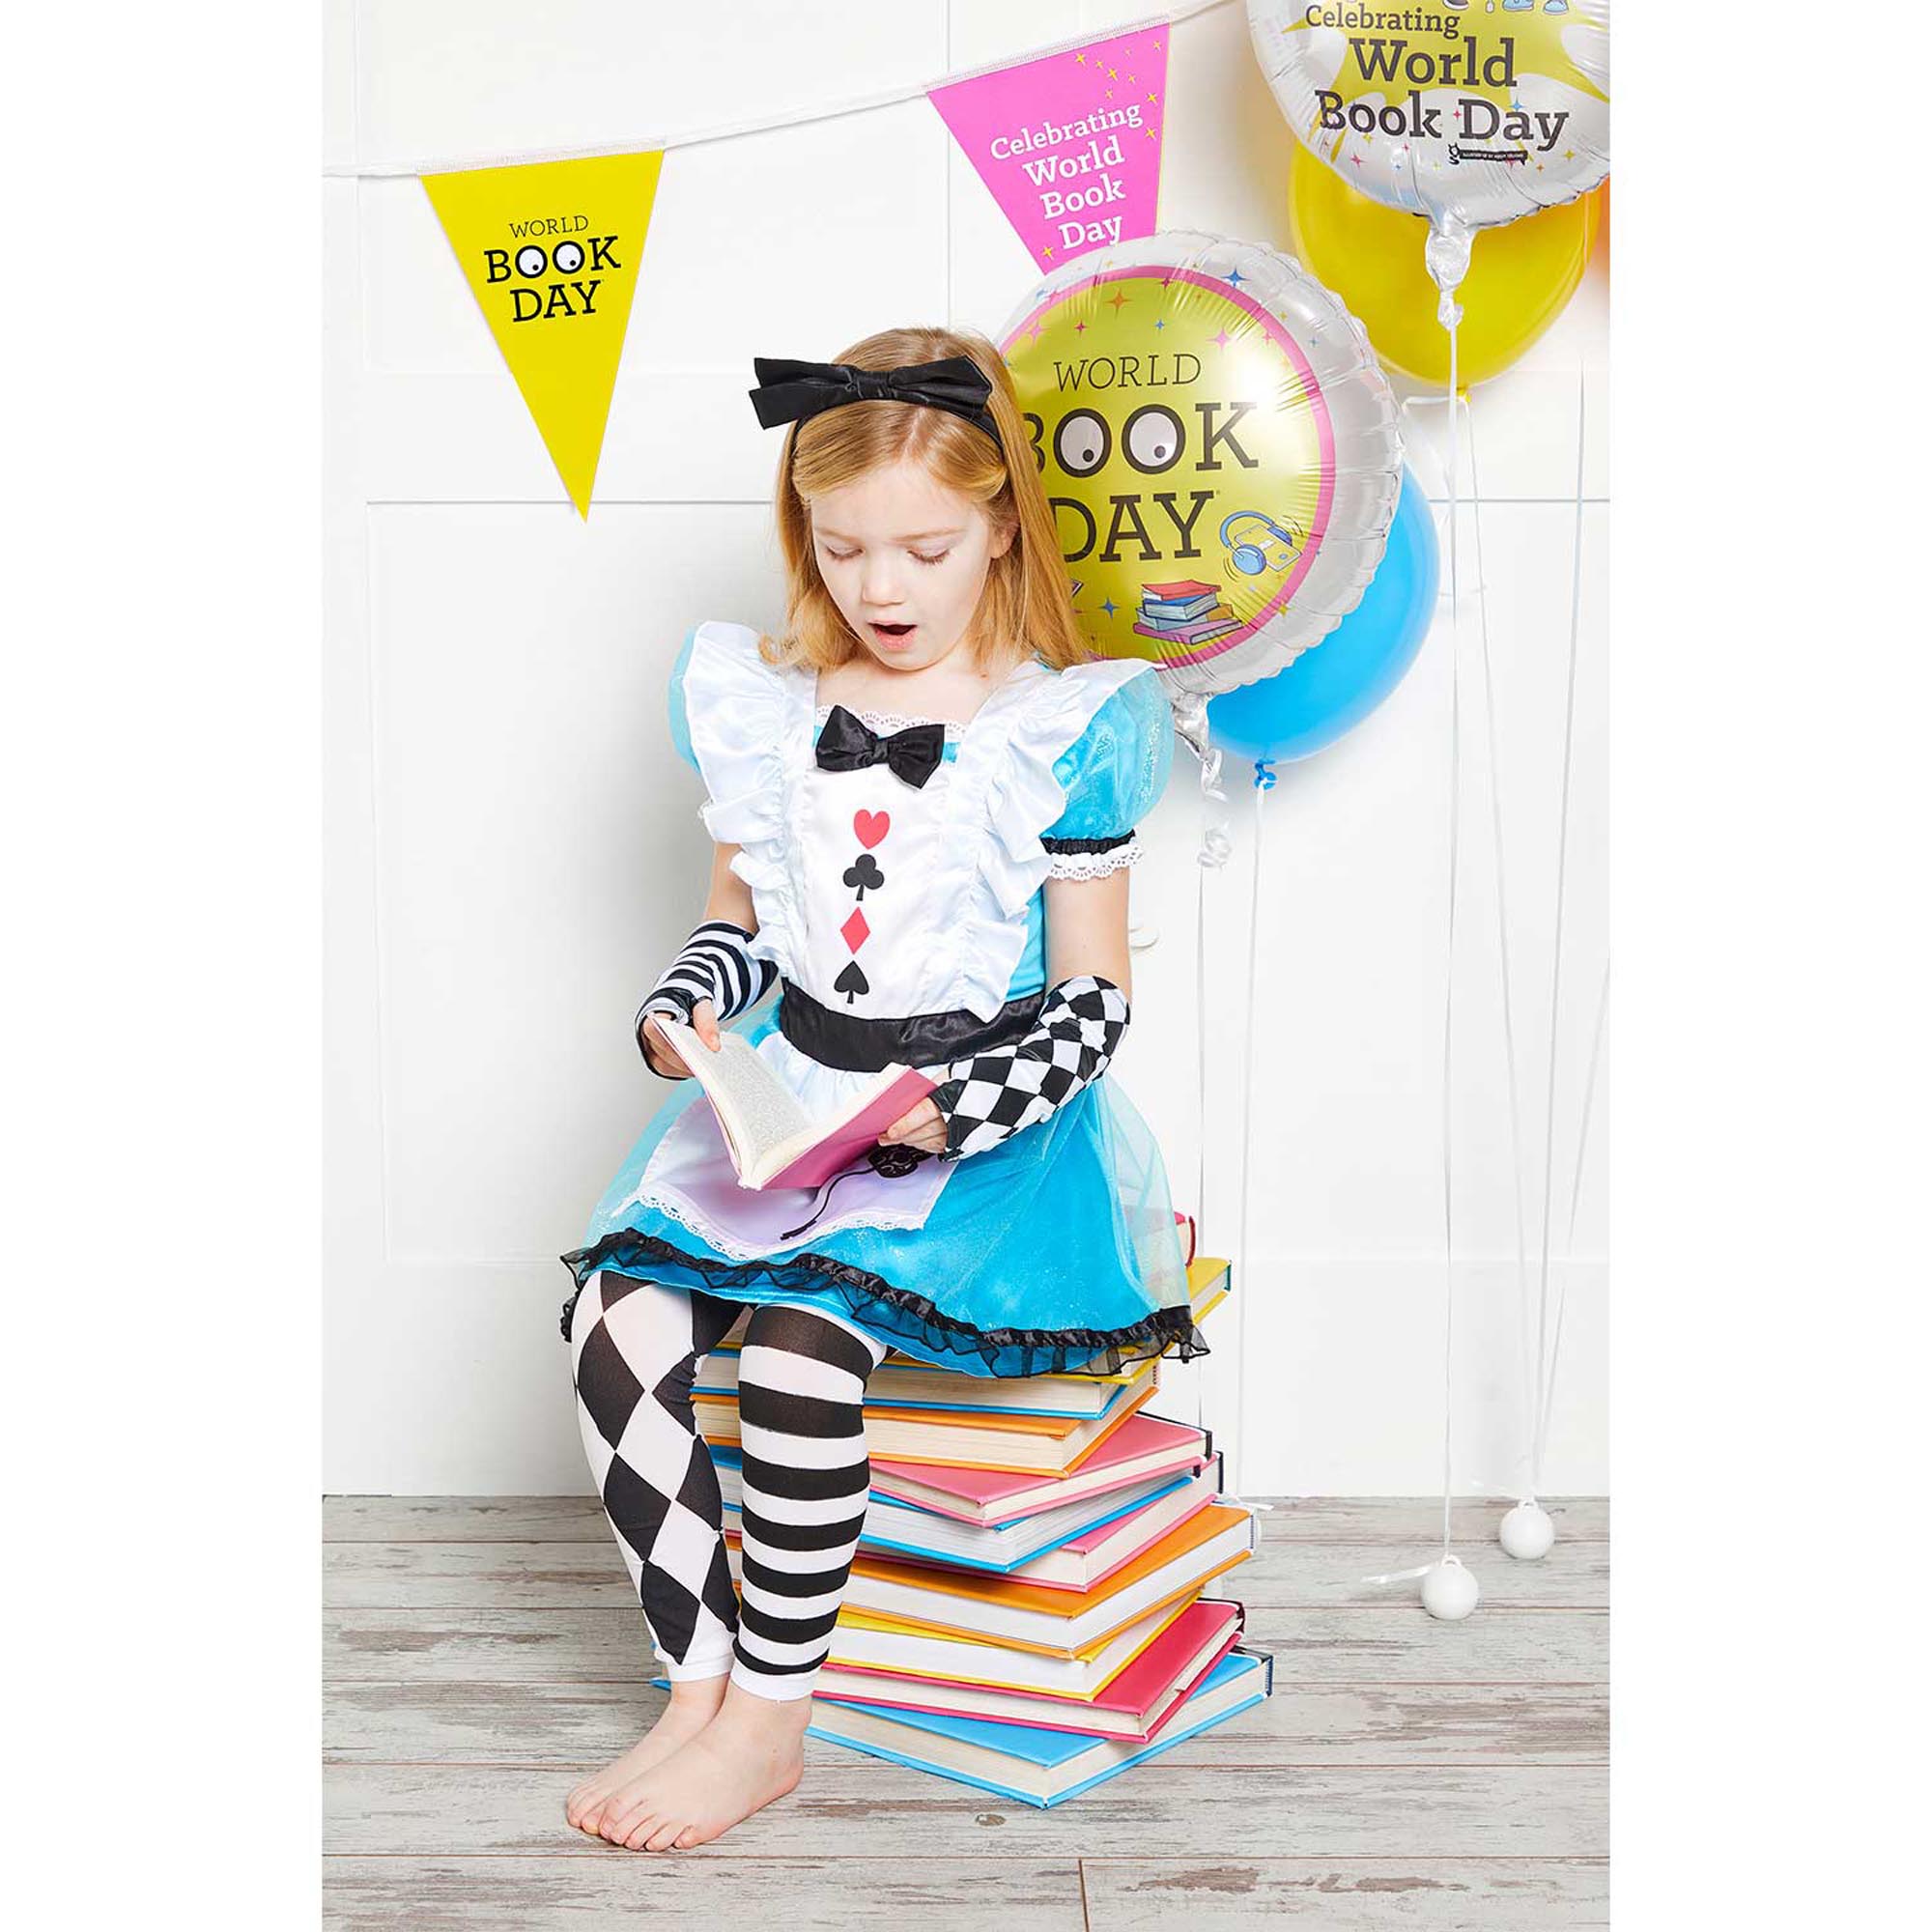 Alice In Wonderland Children's Fancy Dress Costume